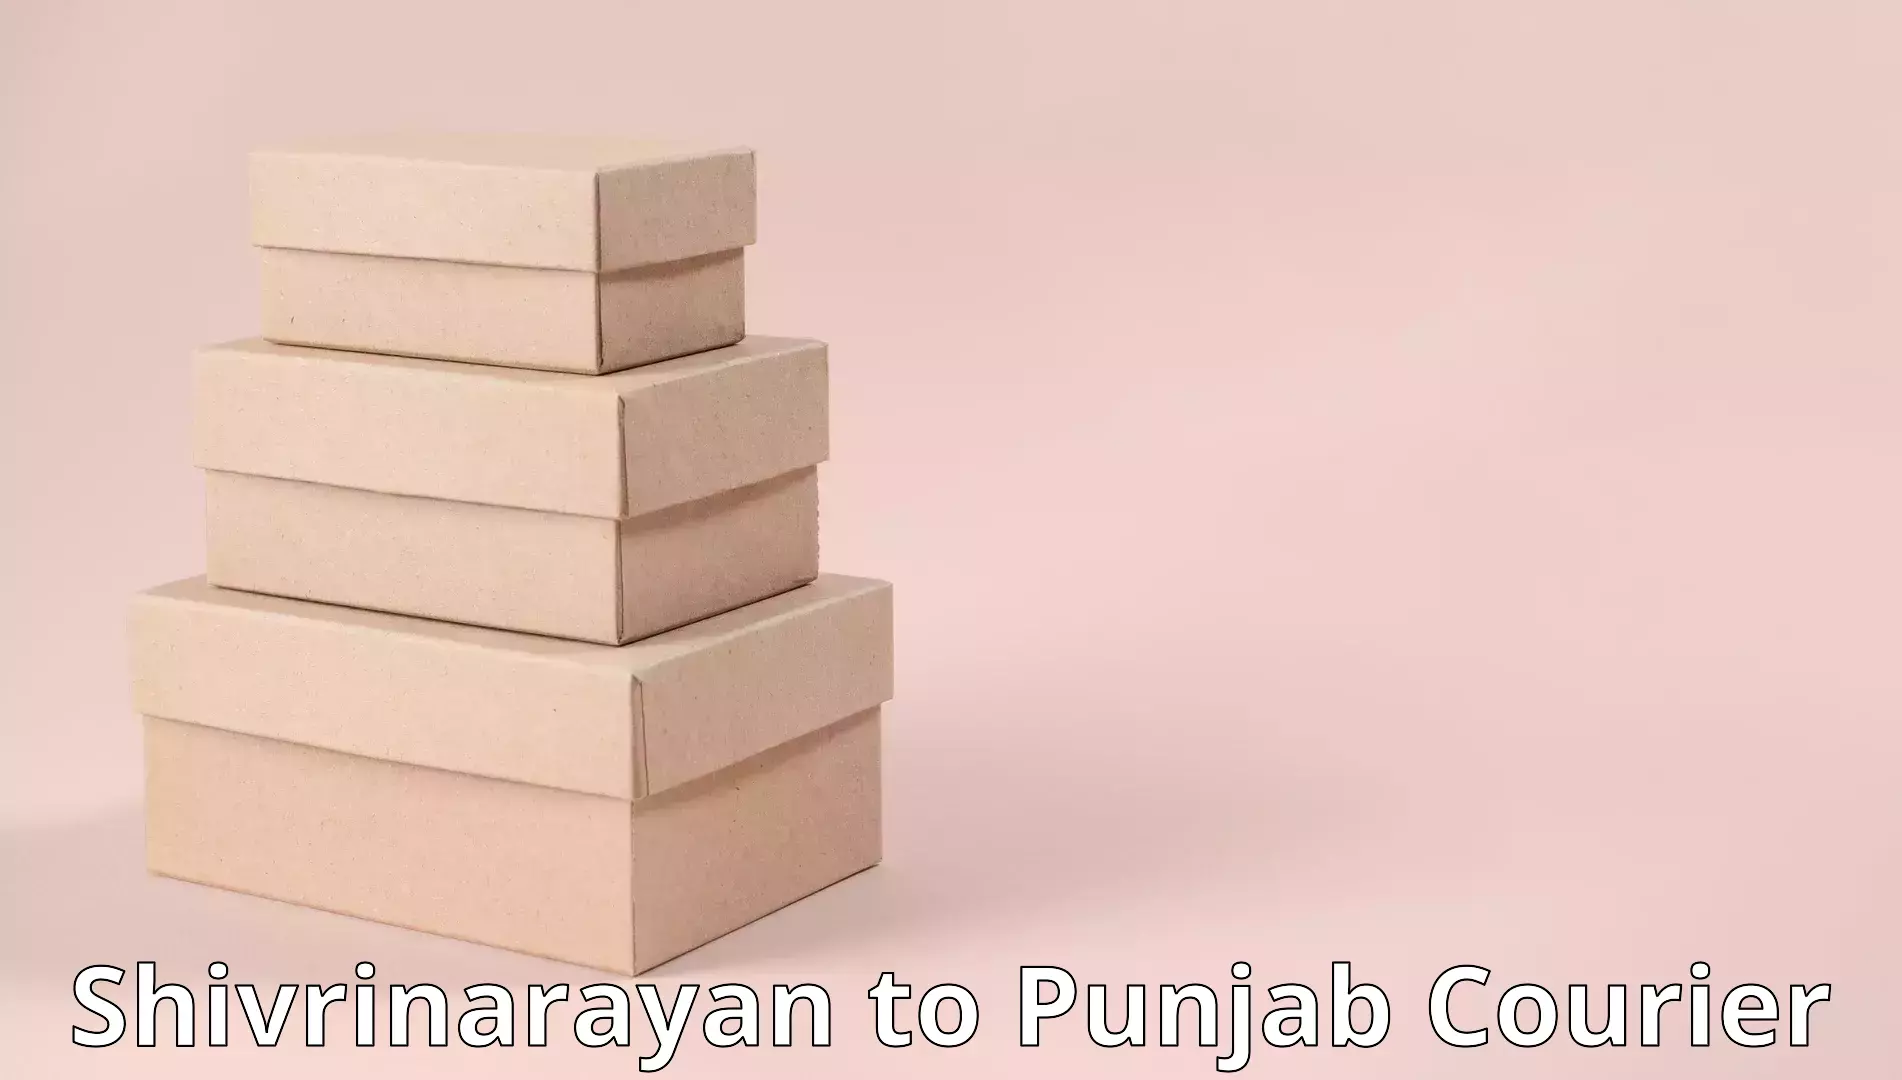 Packing and moving services Shivrinarayan to Punjab